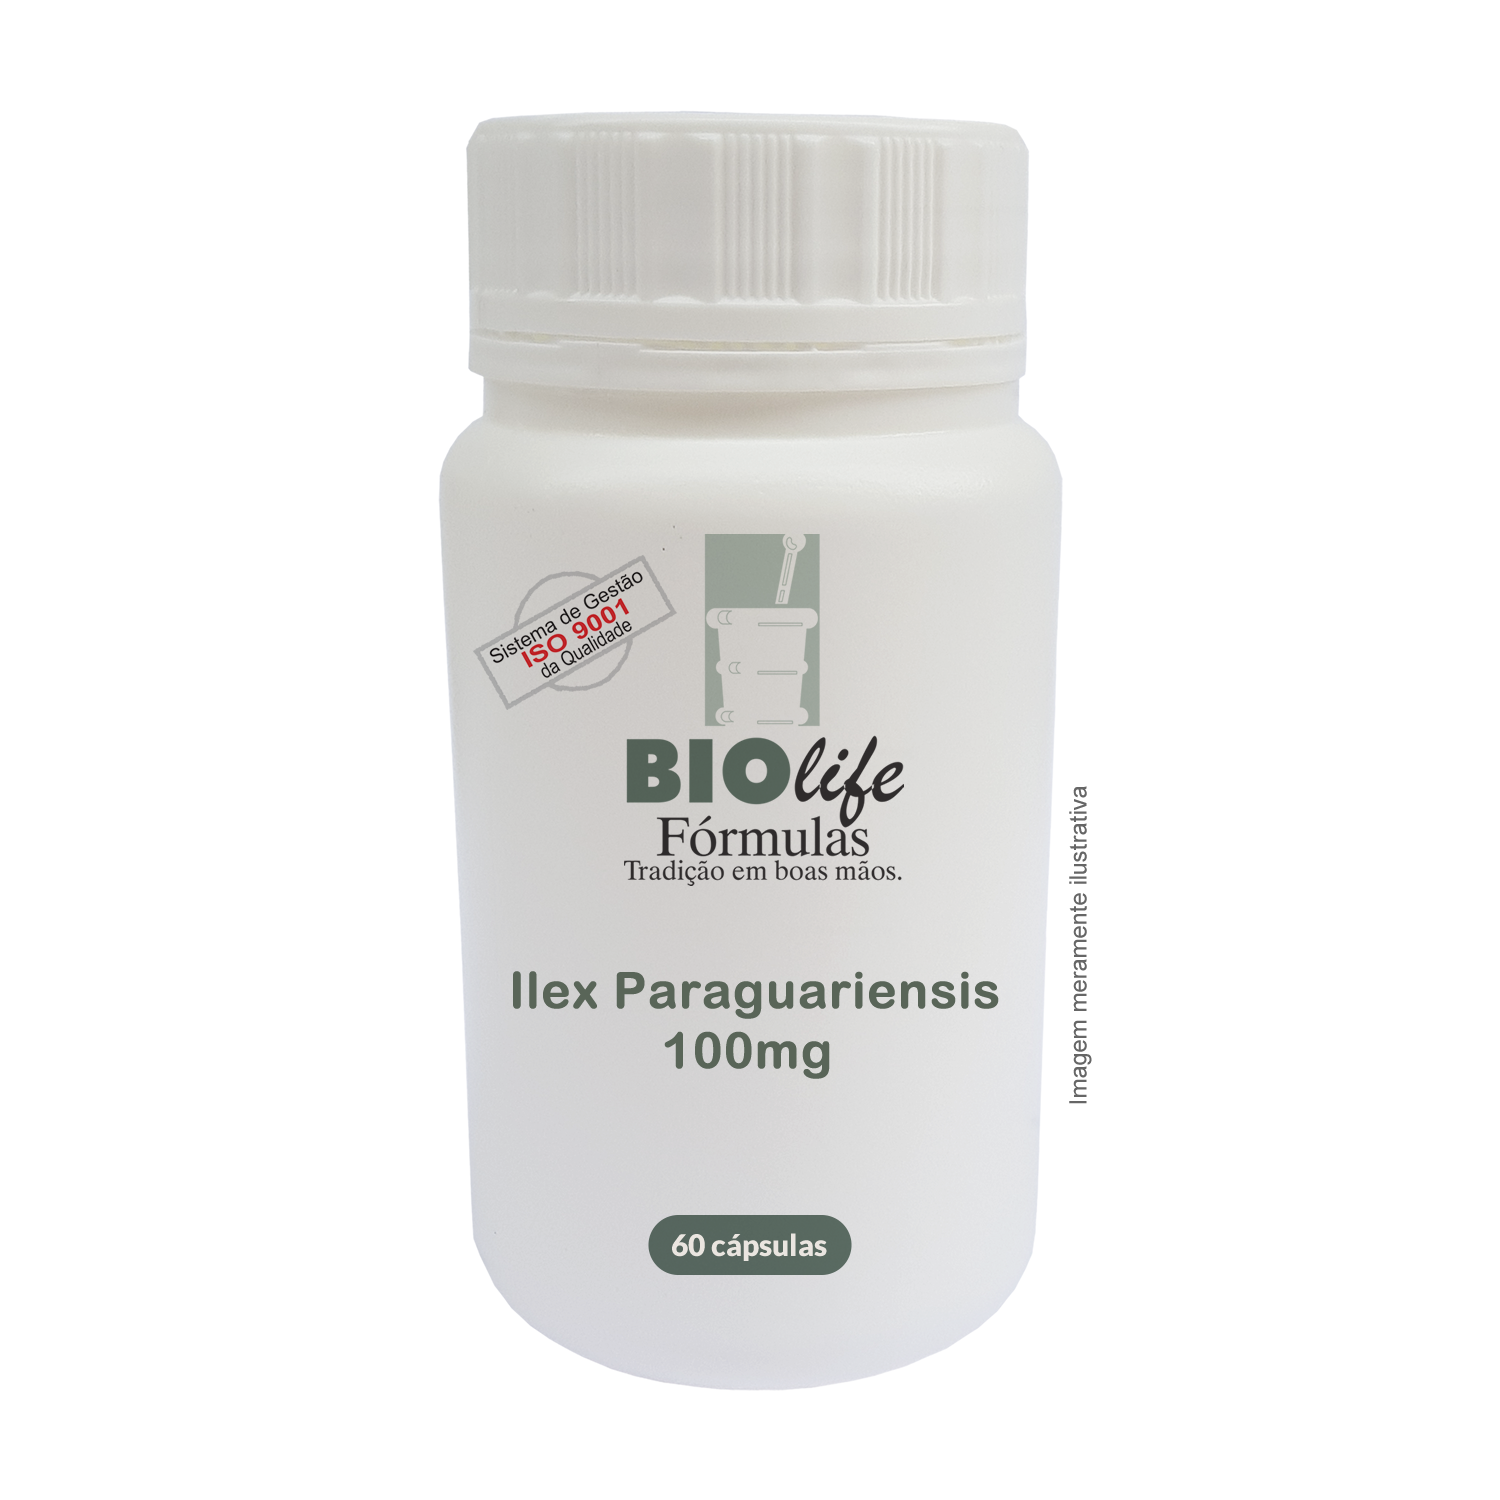 ILEX PARAGUARIENSIS - Saciedade Precoce - BioLife